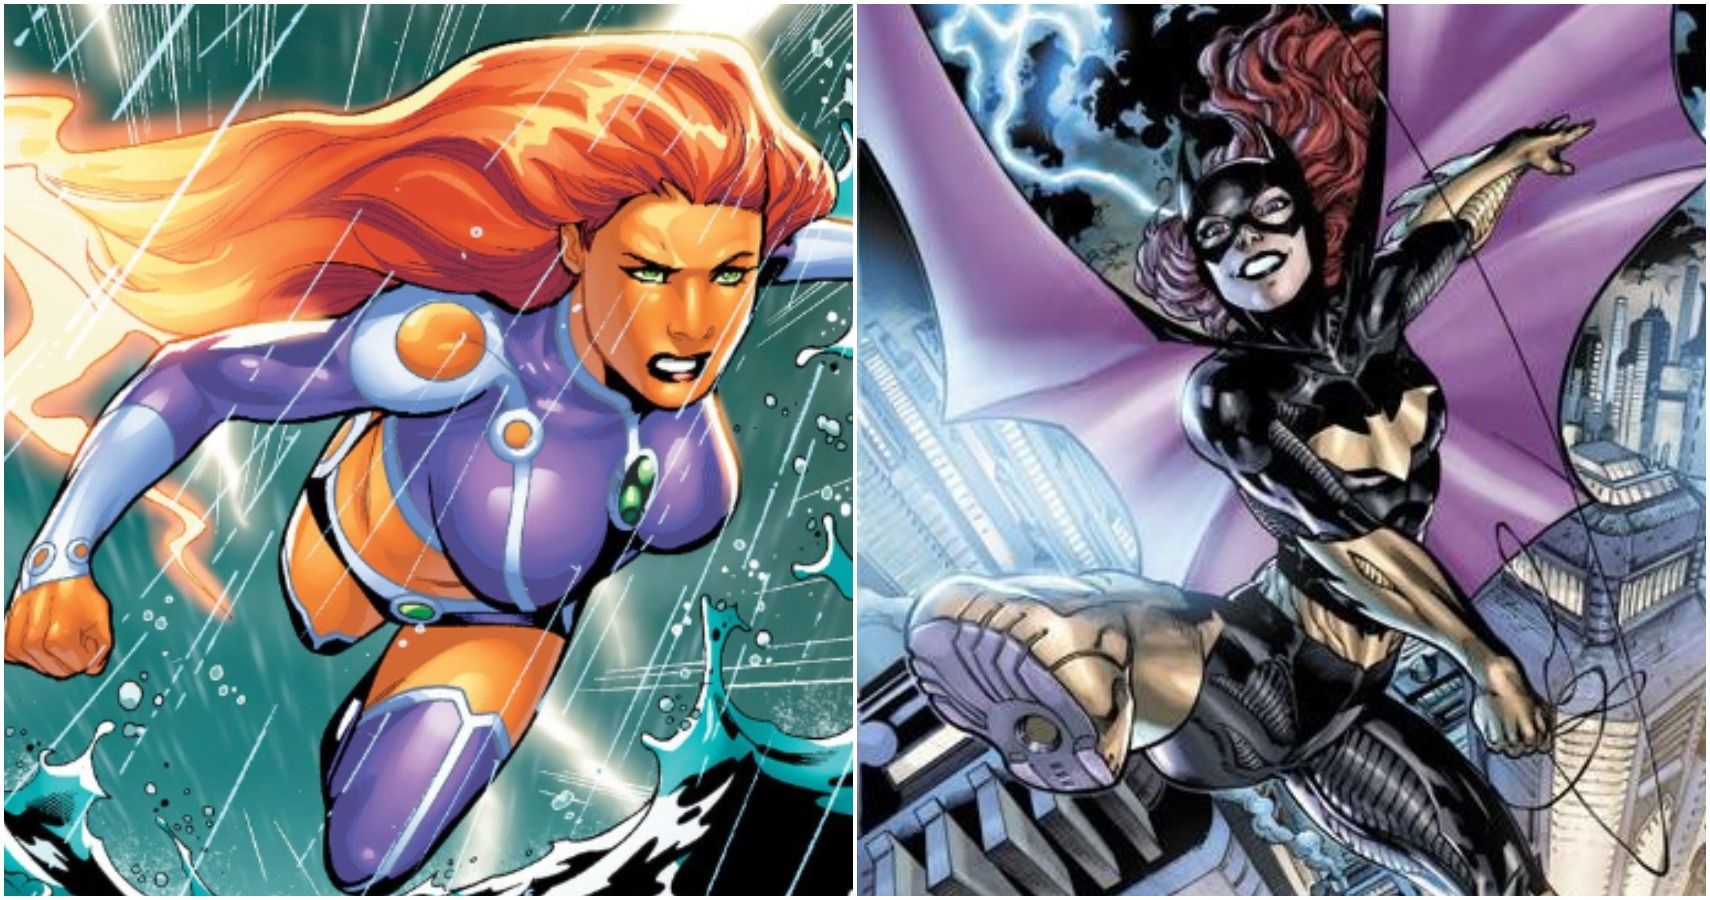 Starfire vs Batgirl: Who Would Win? 